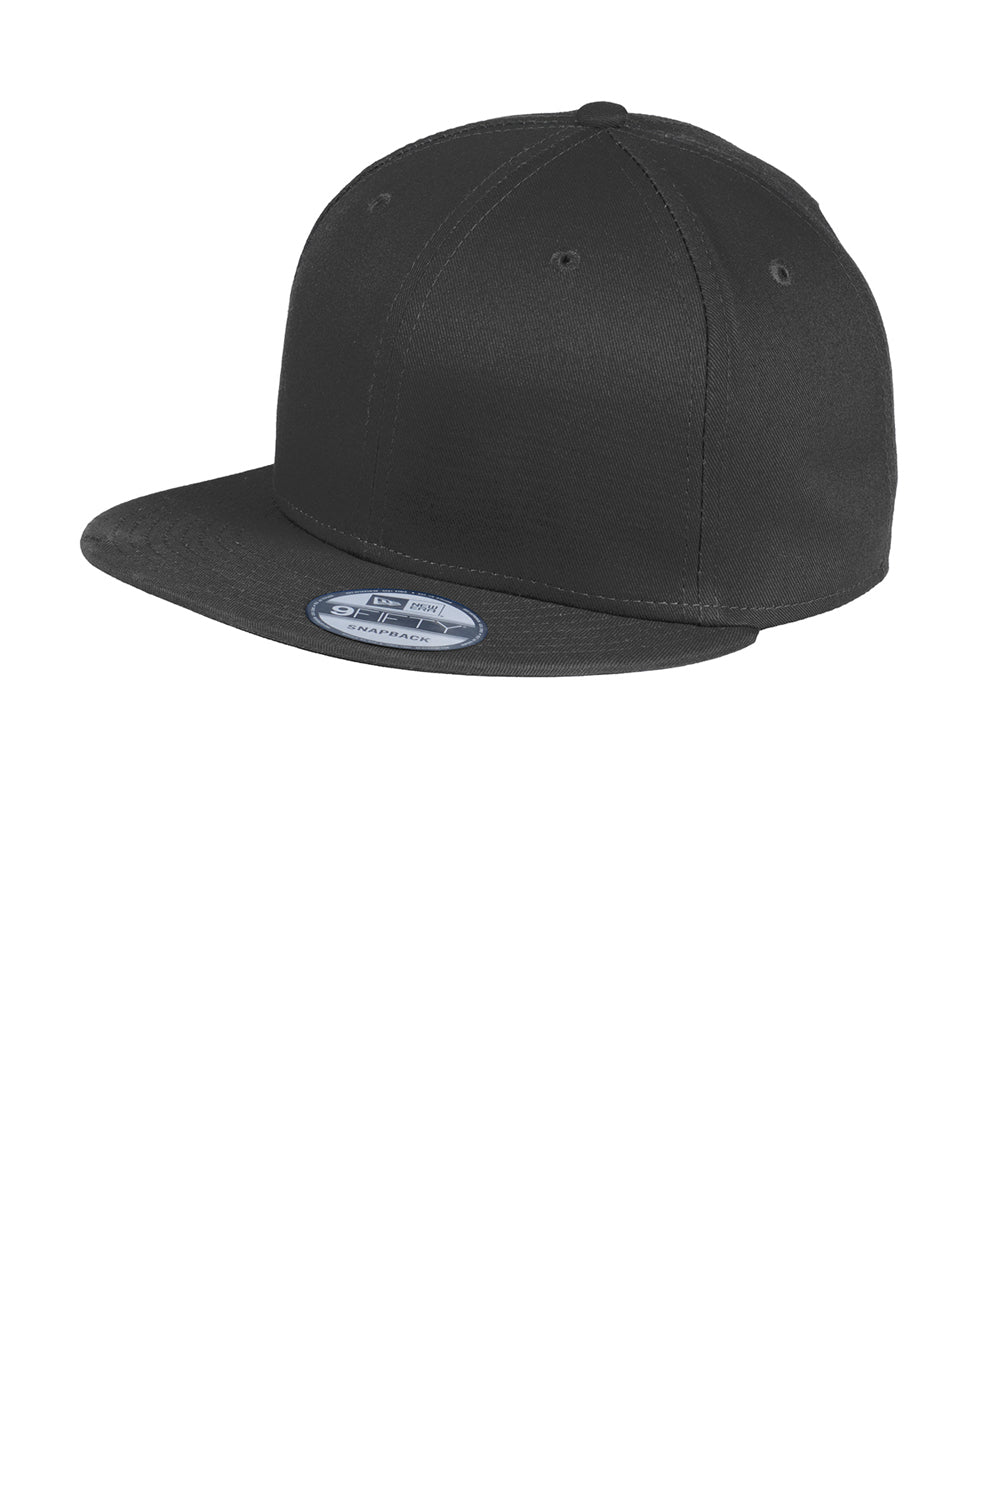 New Era NE400 Mens Adjustable Hat Black Front